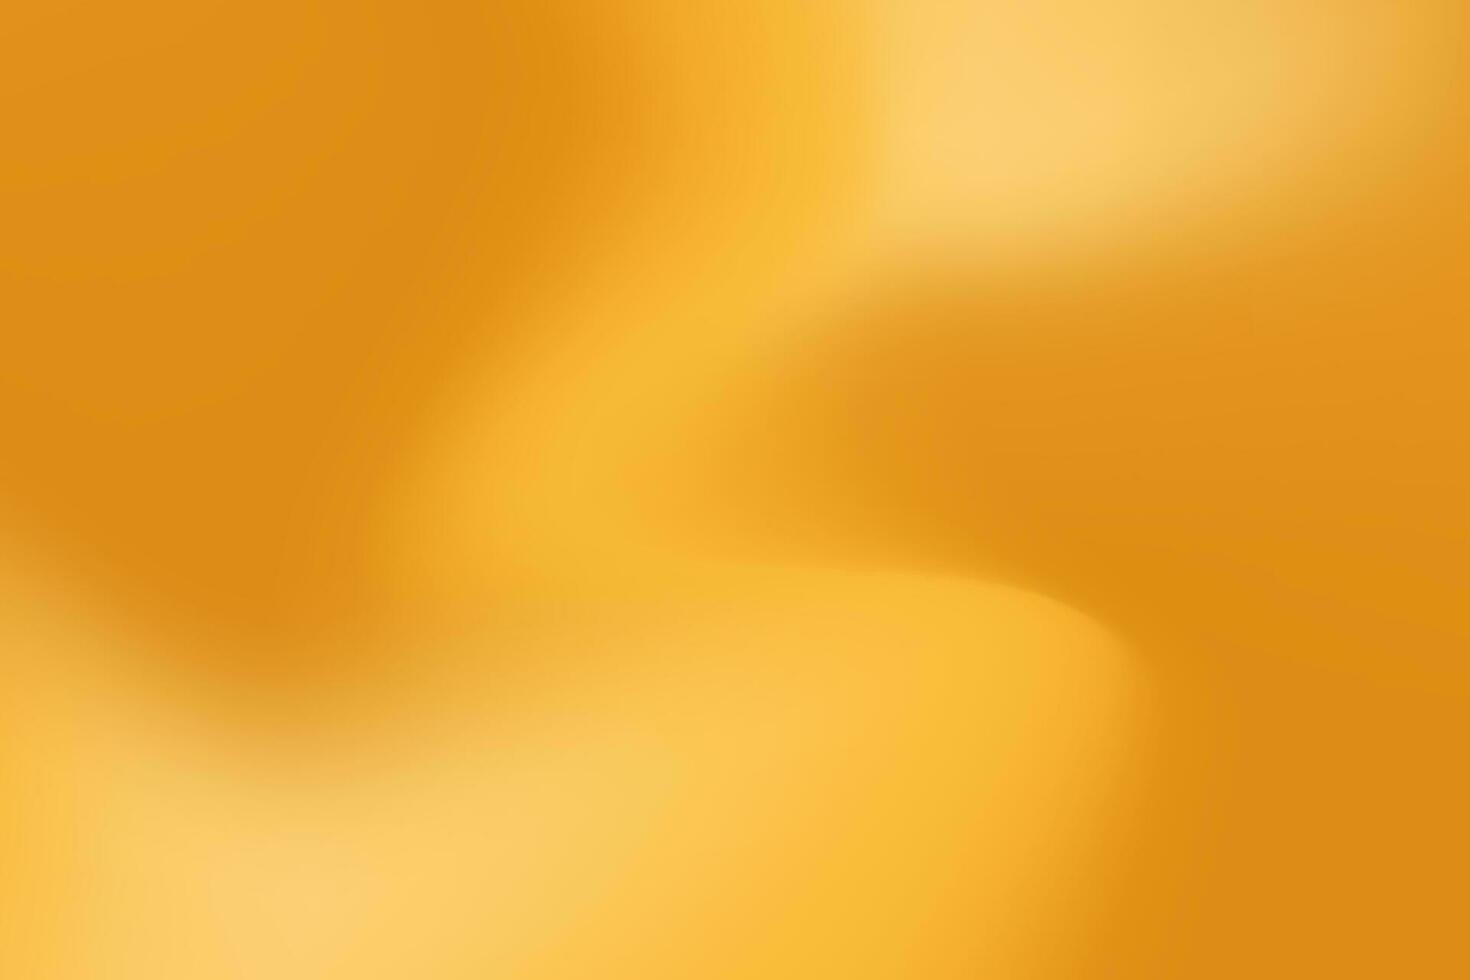 amarillo naranja degradado. dorado vara, caramelo de azúcar con mantequilla, dorado campana degradado malla. suave color antecedentes. vector ilustración. eps 10